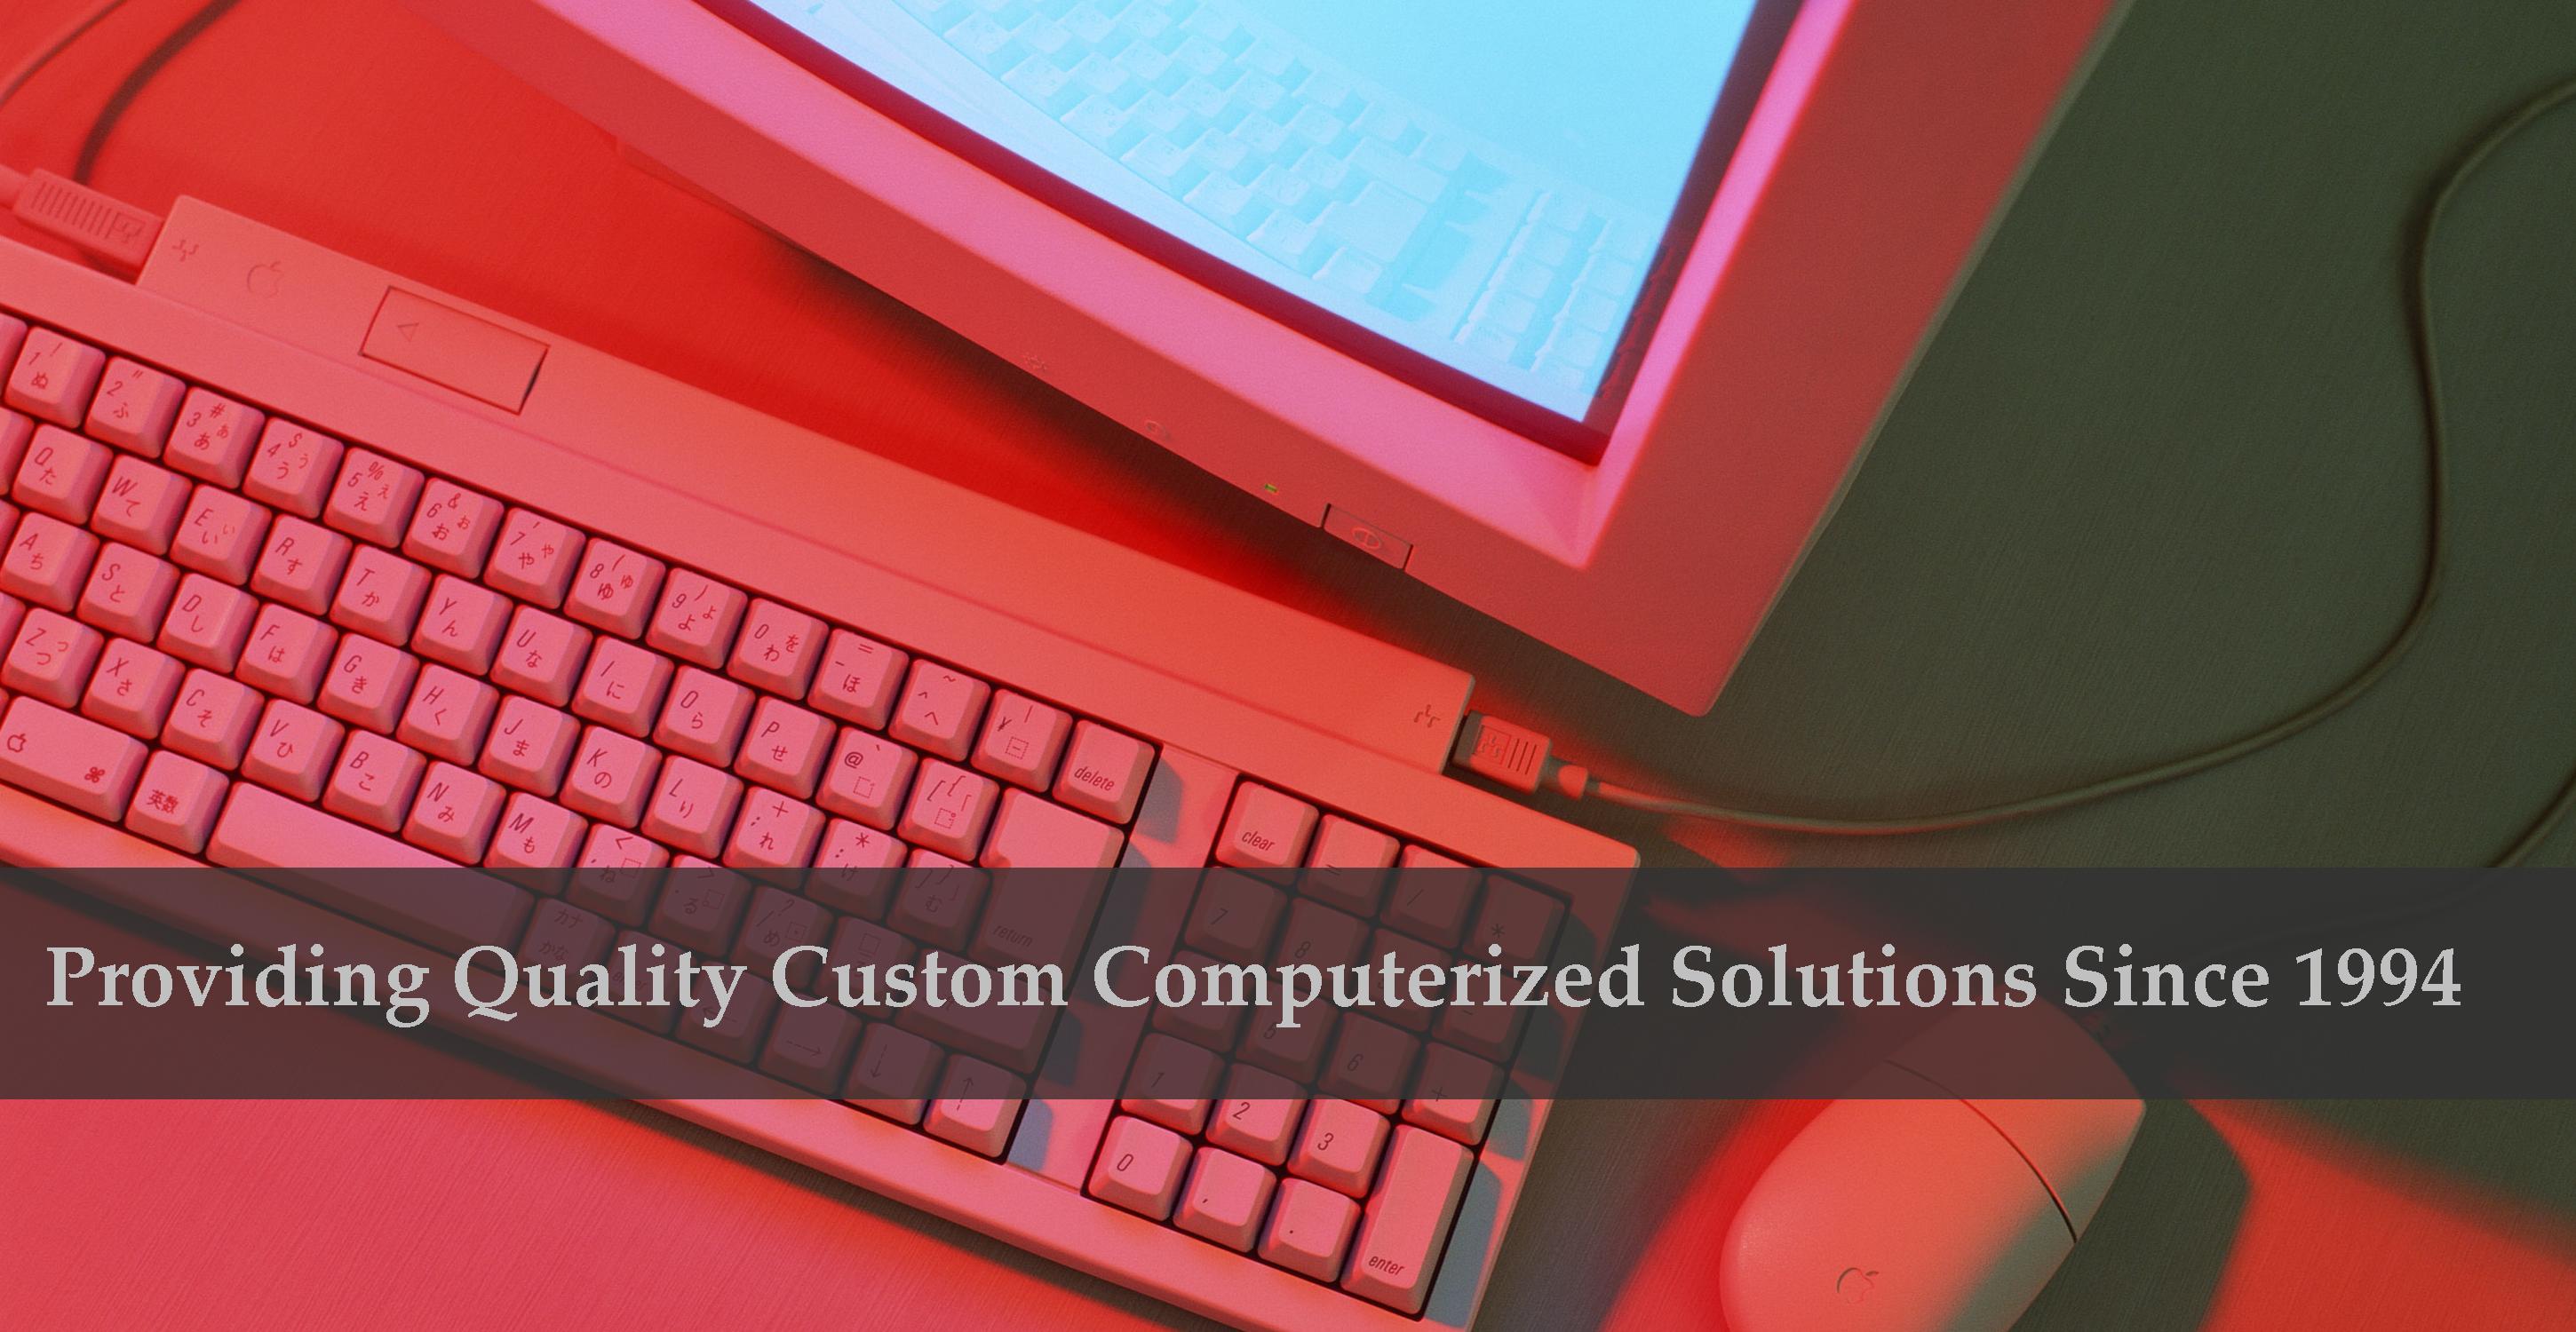 Providing Quality Custom Computerized Solutions, Since 1994